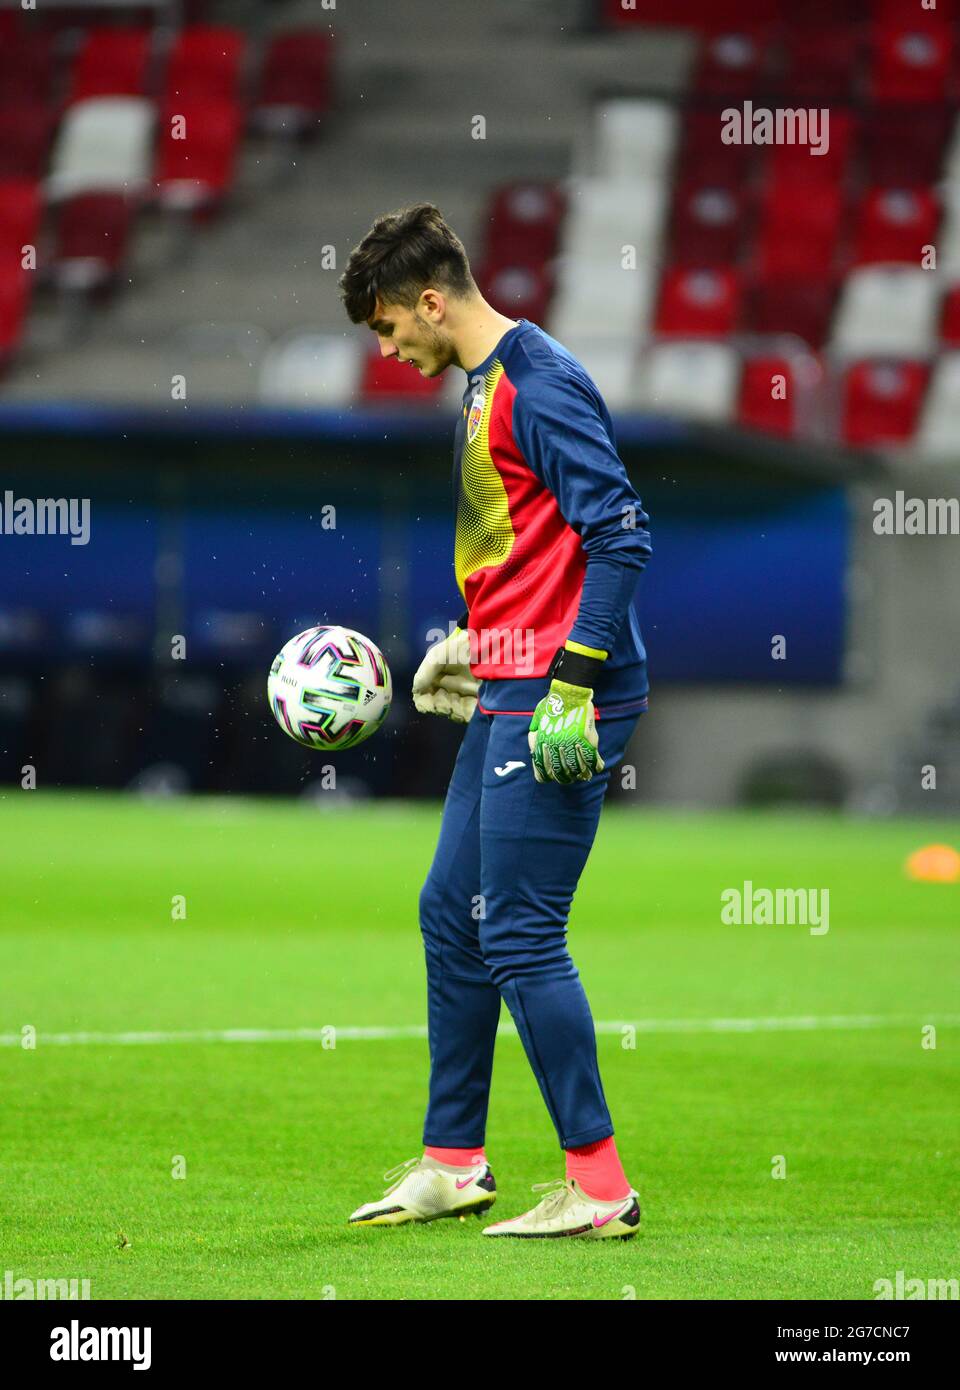 Marian Aioani - Rumänische Fußballnationalmannschaft Stockfotografie - Alamy